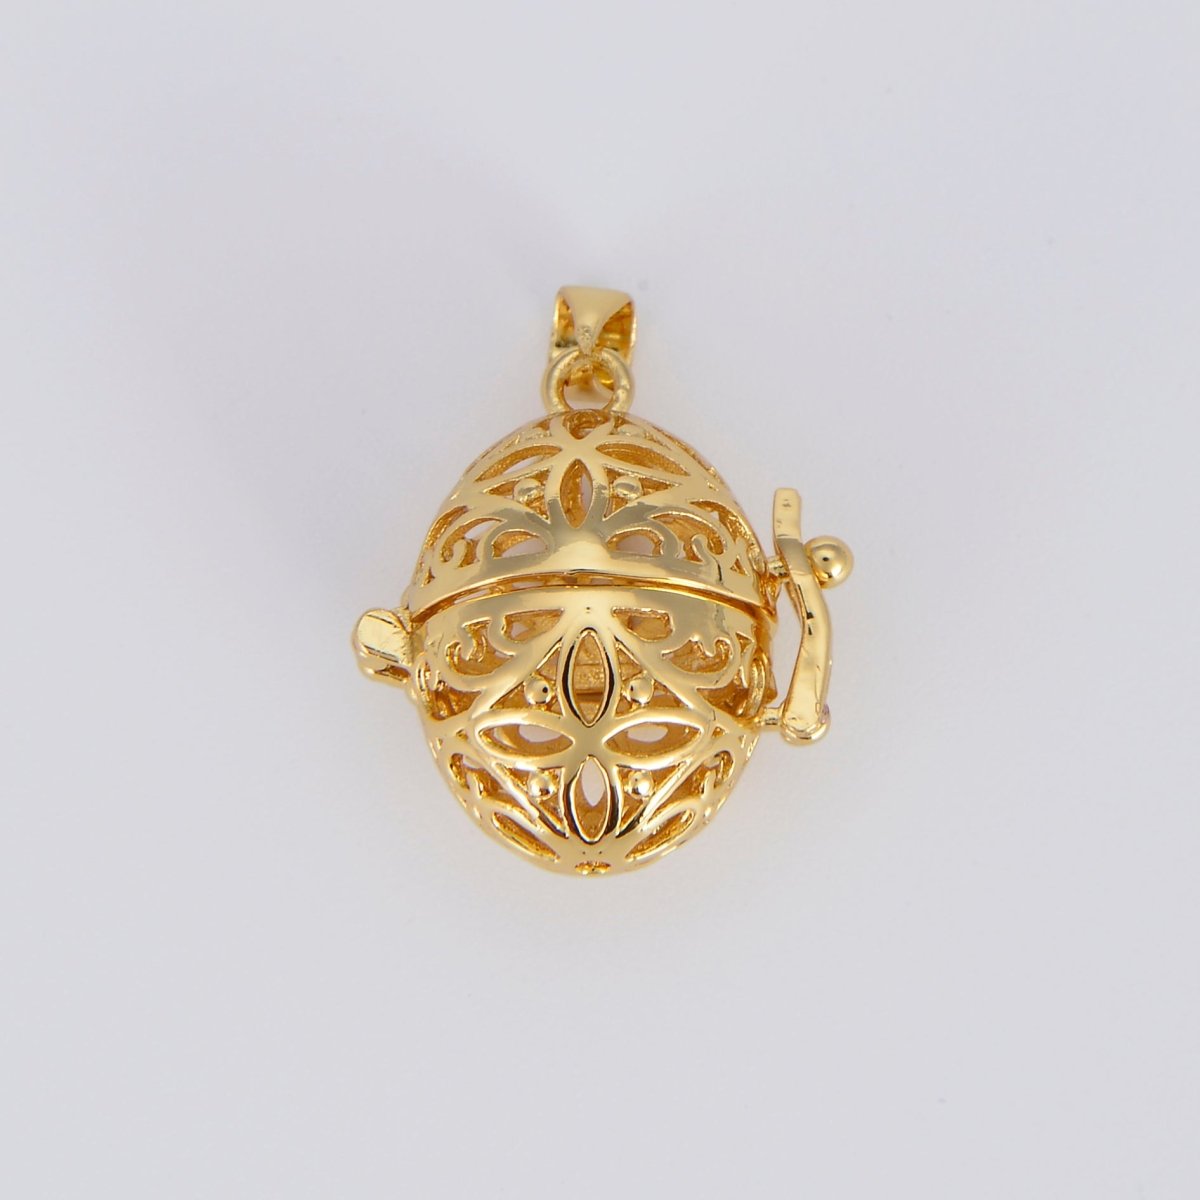 Healing Stone cage locket pendant Gold EGG Pendant, Gemstone Diffused Jewelry Making, DIY Gemstone Natural Stone Locket Charms necklace H-740 - DLUXCA